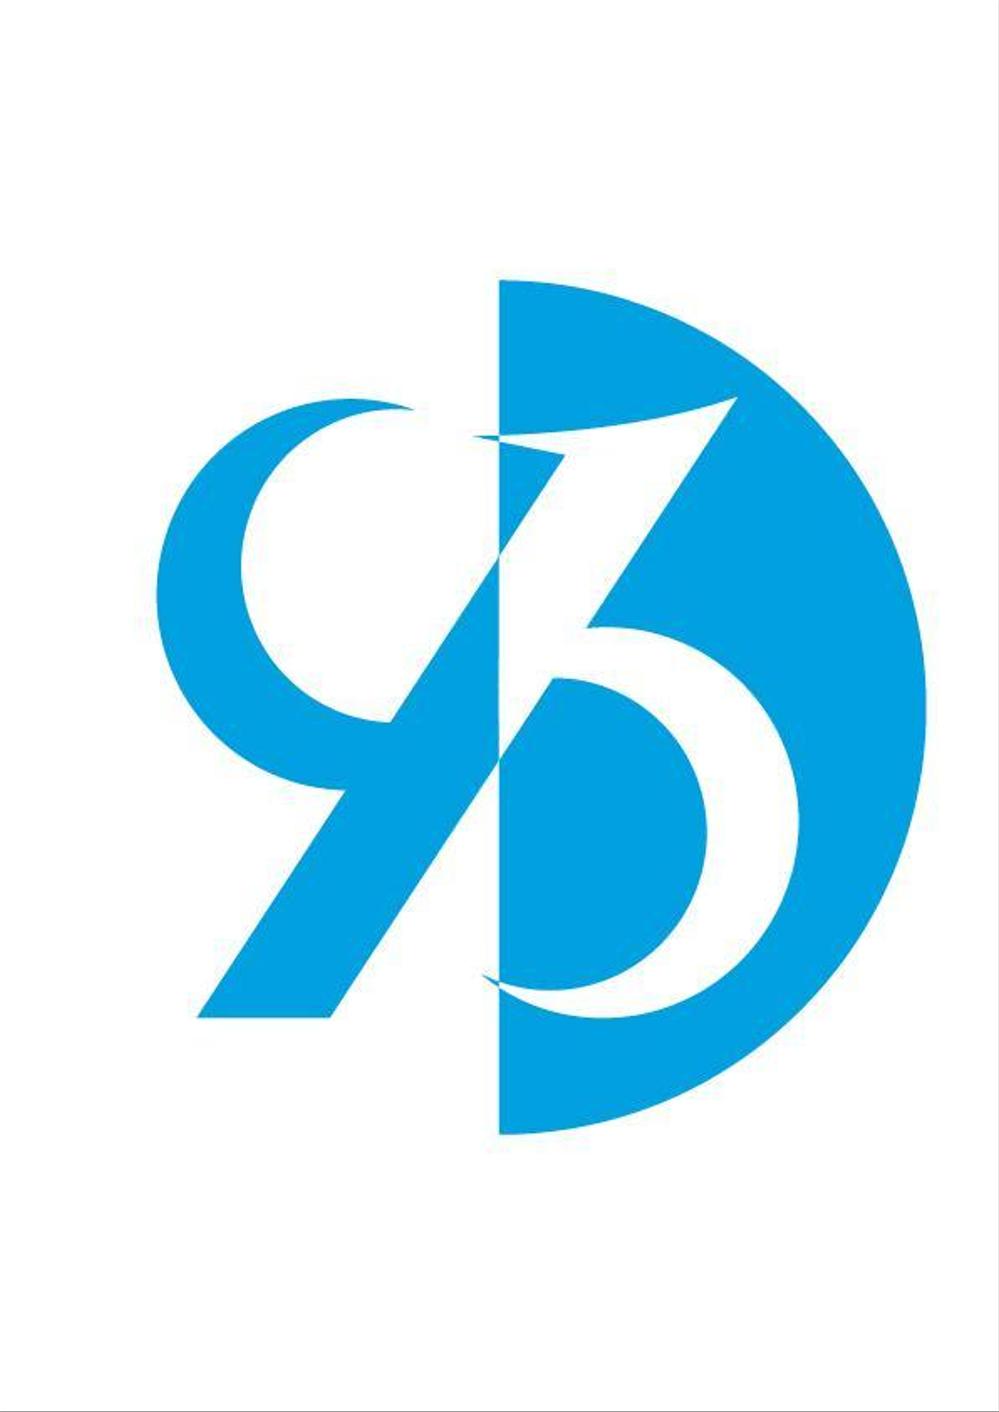 logo_3.jpg